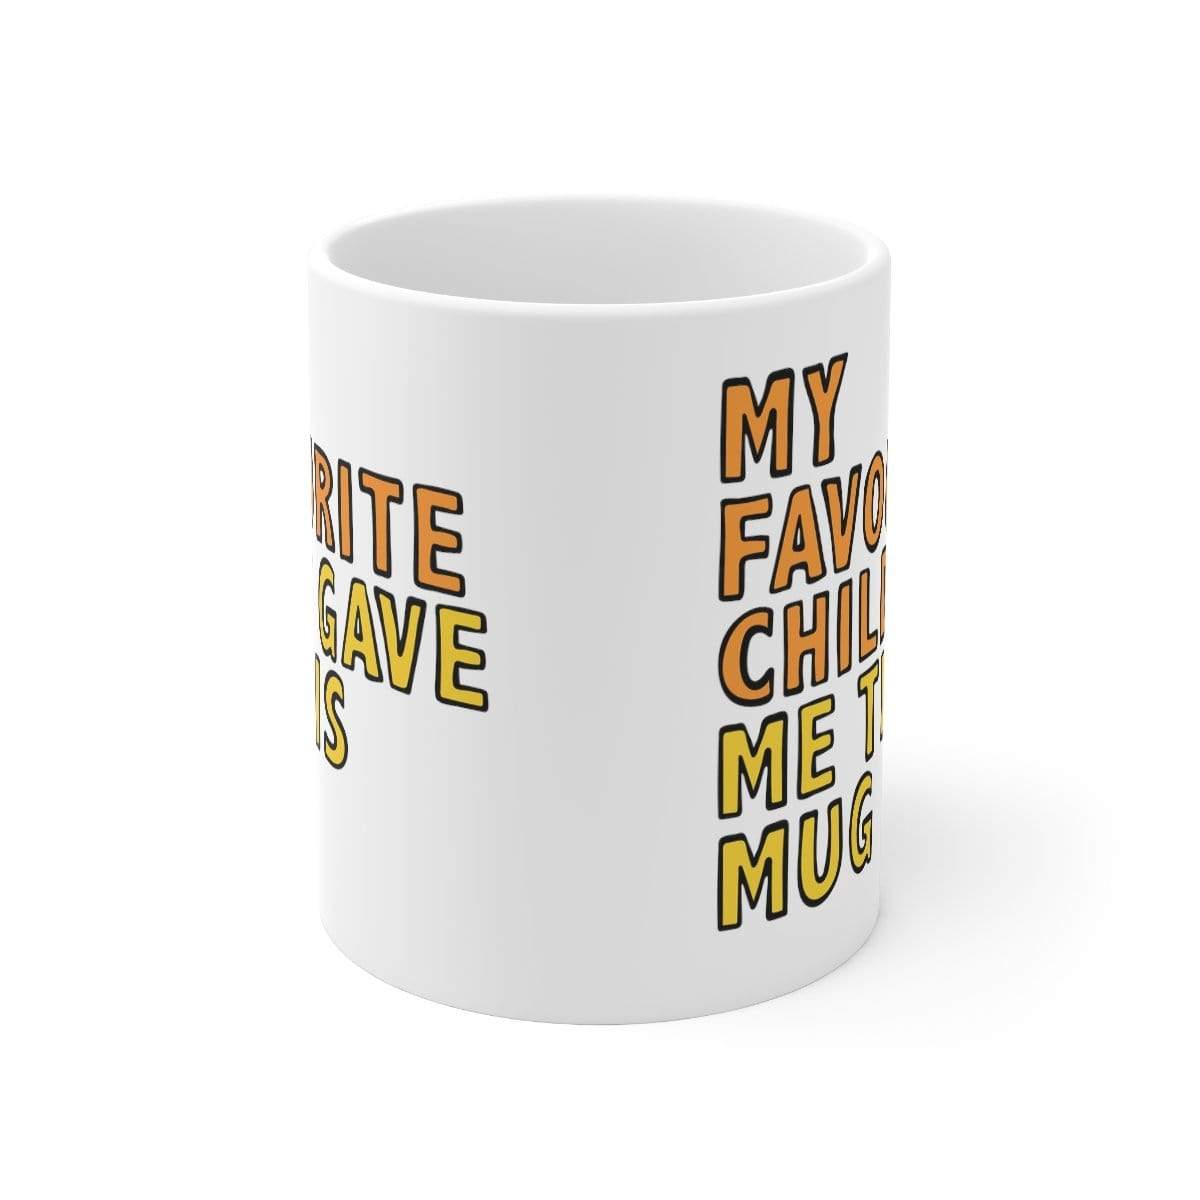 Favourite Child 🏆 - Coffee Mug